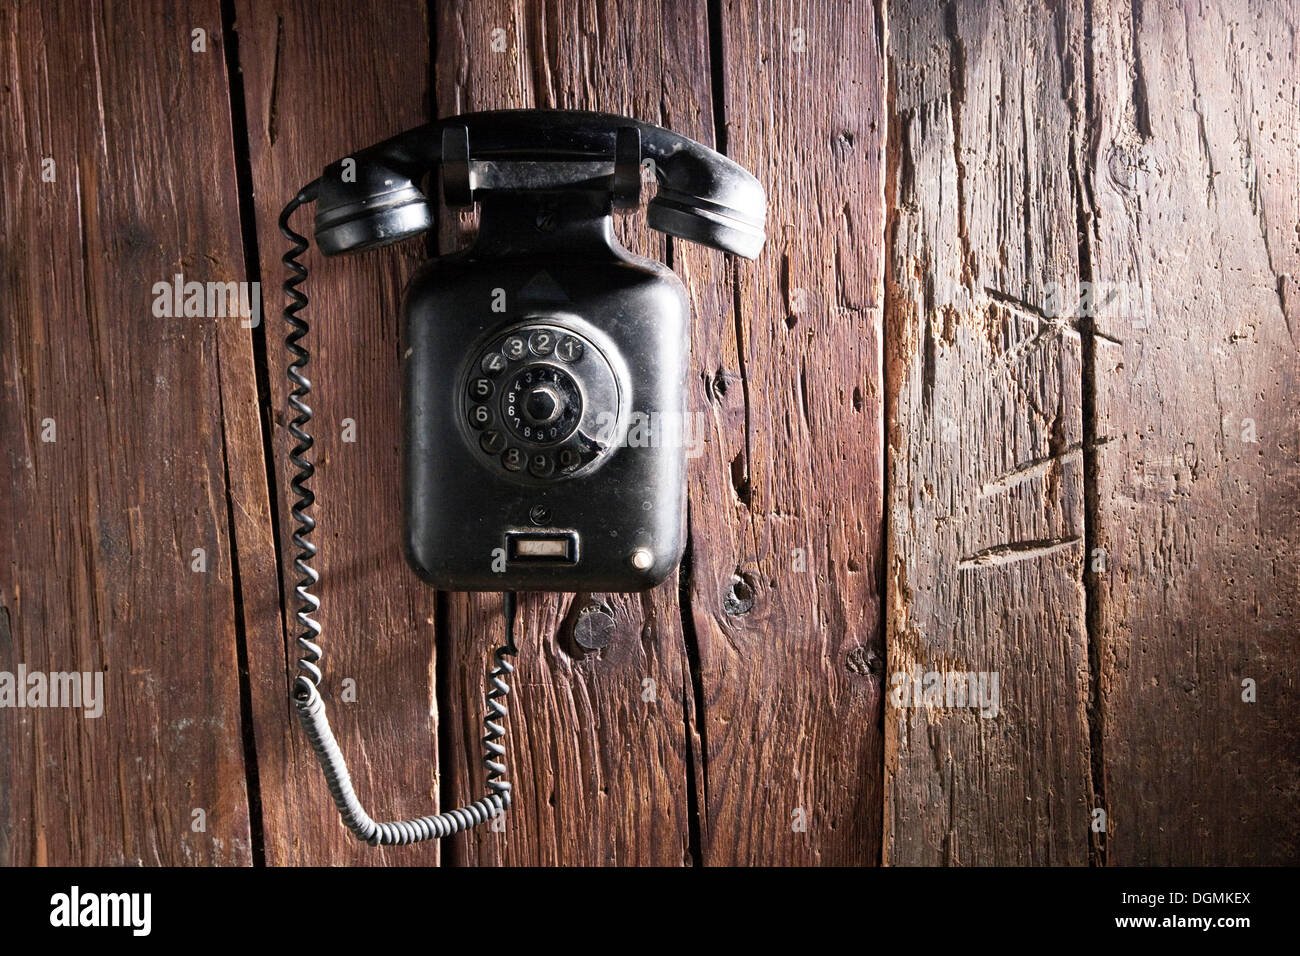 Ancien téléphone mural en bakélite de 1950, hanging on a rustic wooden wall Banque D'Images